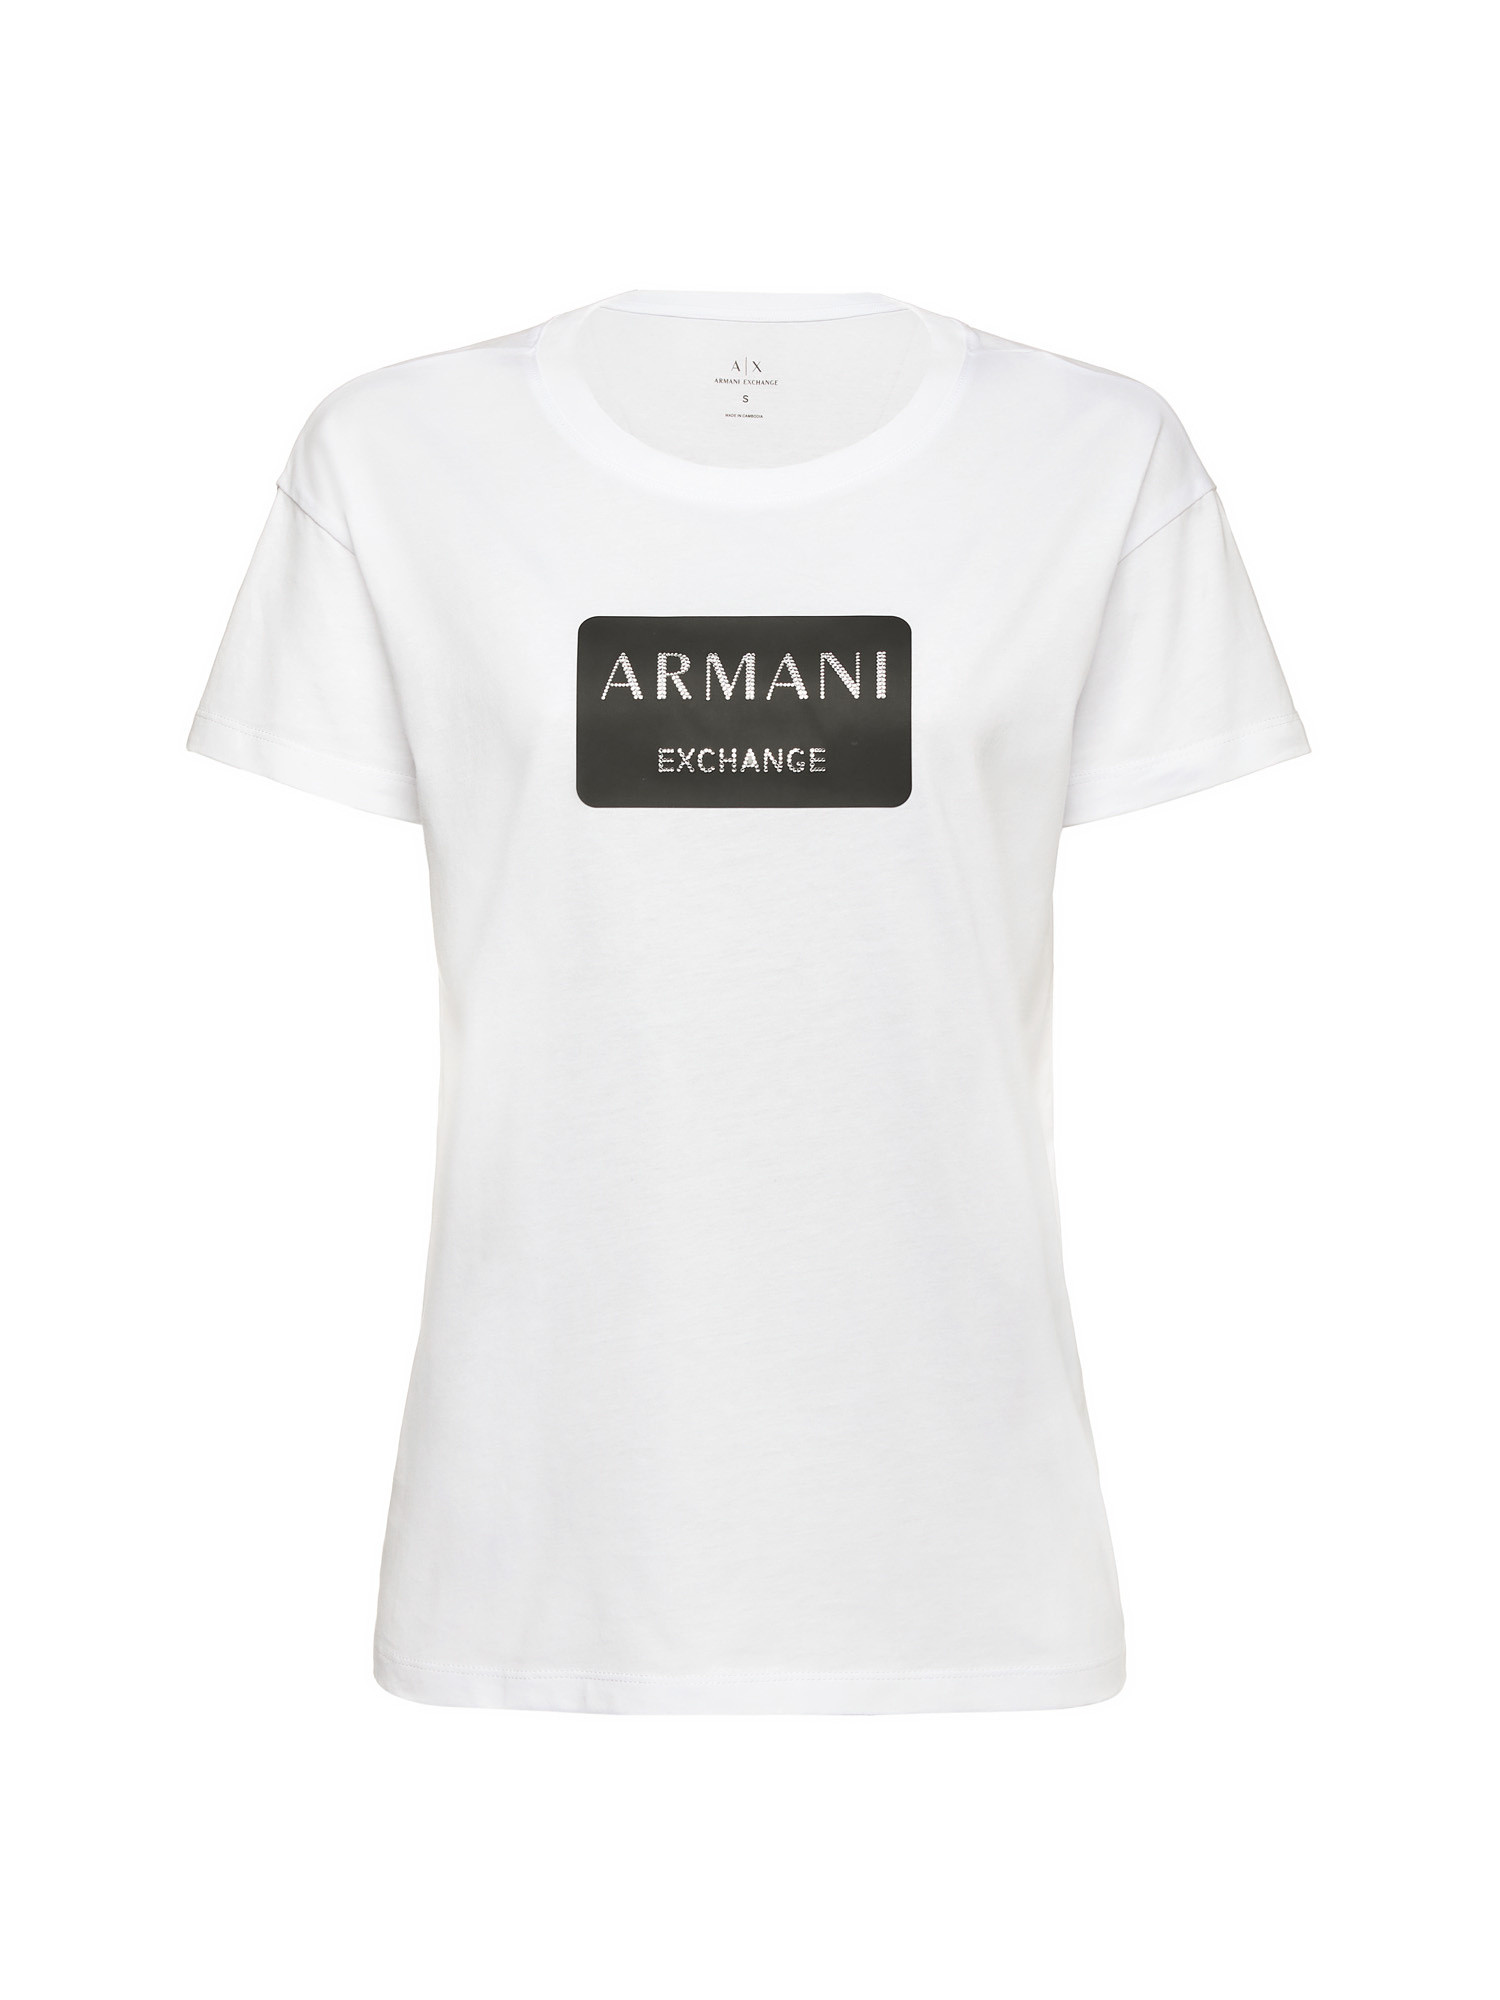 Armani Exchange - T-shirt boyfriend fit in cotone con logo, Bianco, large image number 0